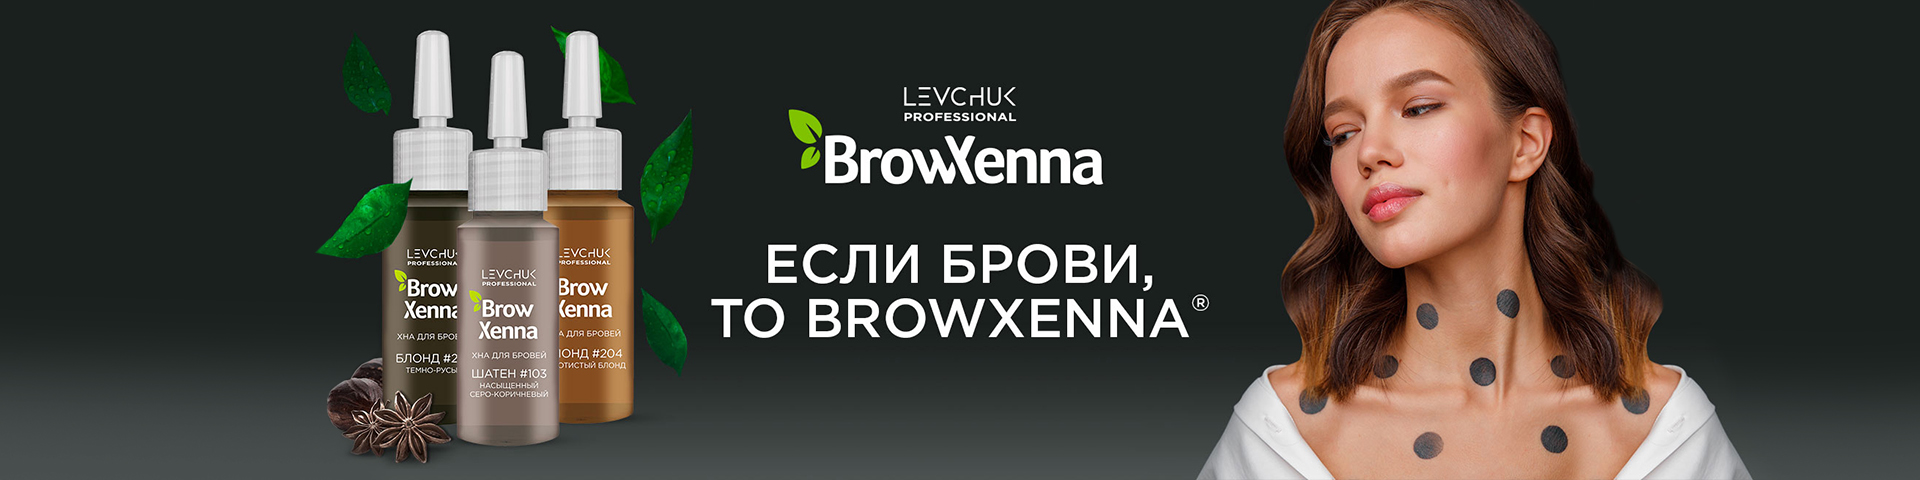 BrowHenna